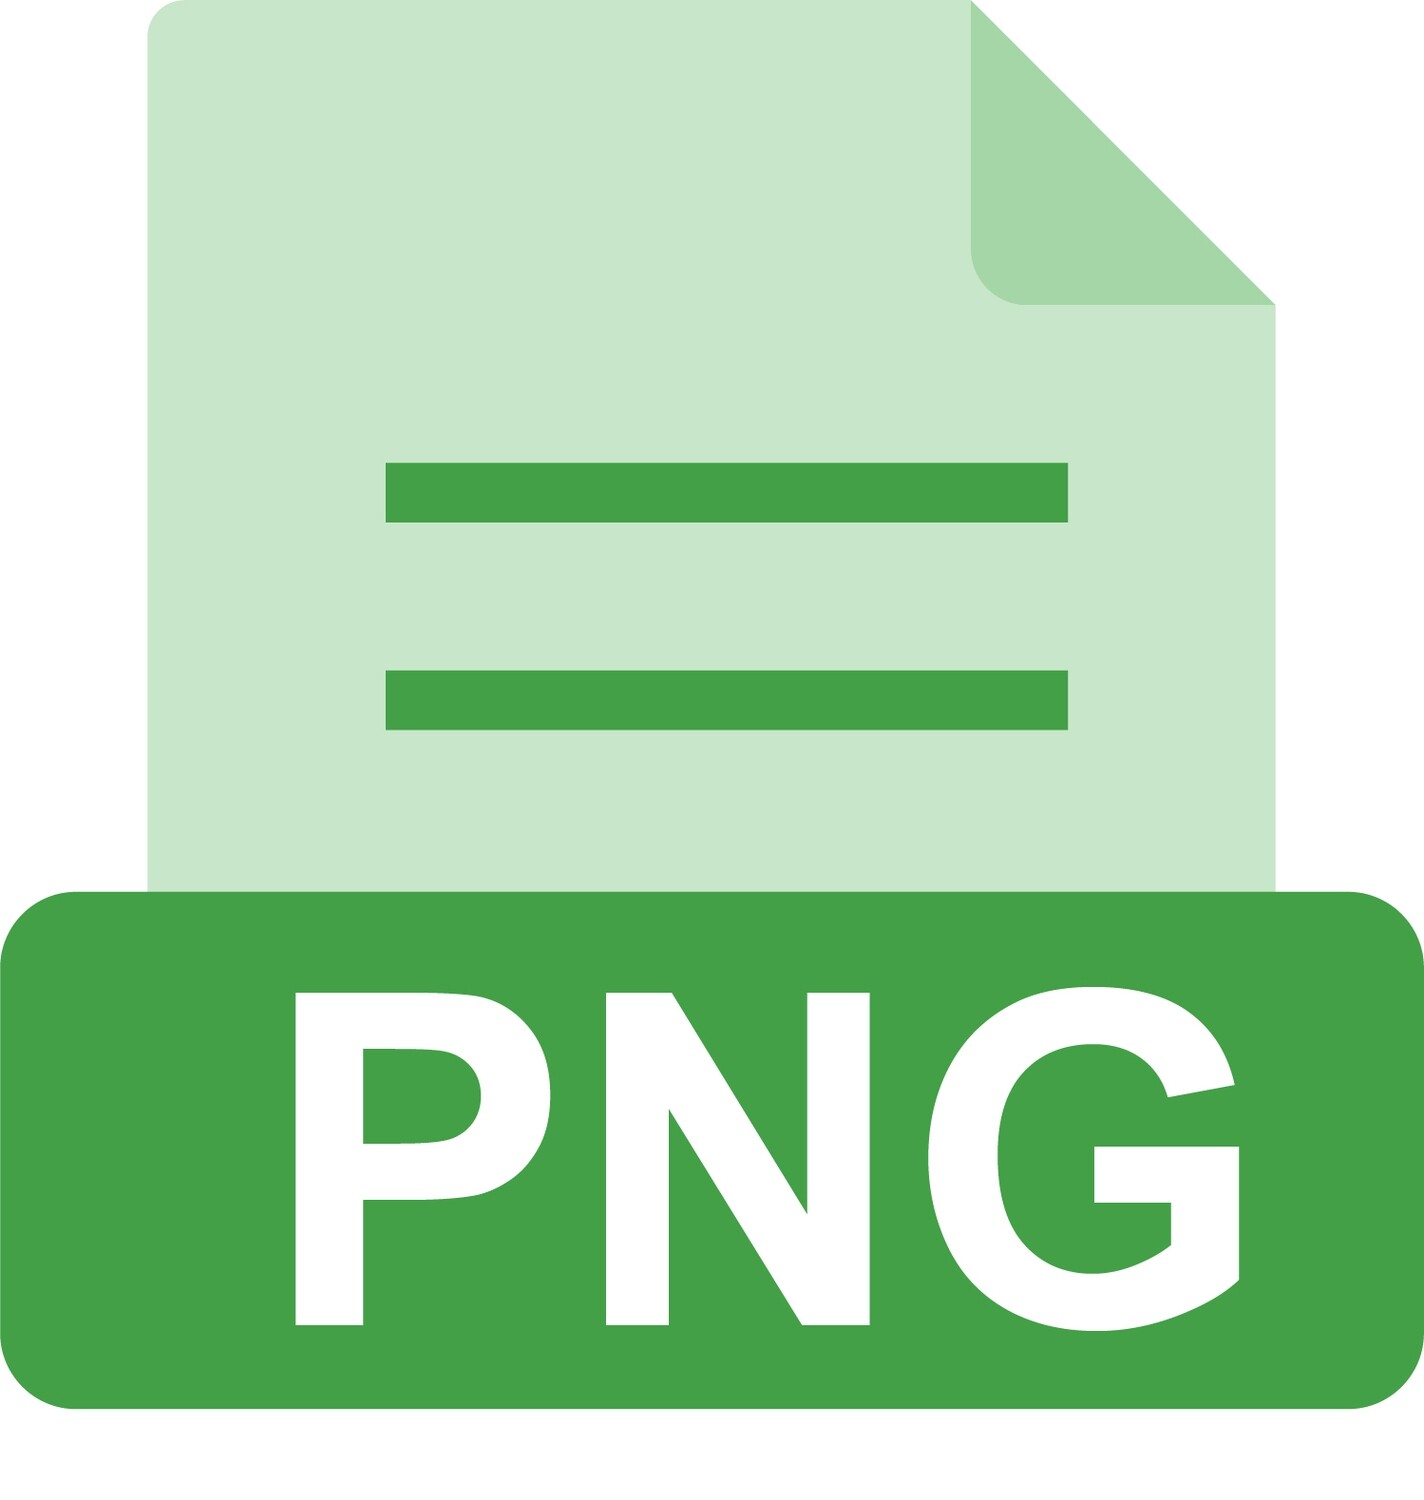 E-File: PNG, PE Kentucky